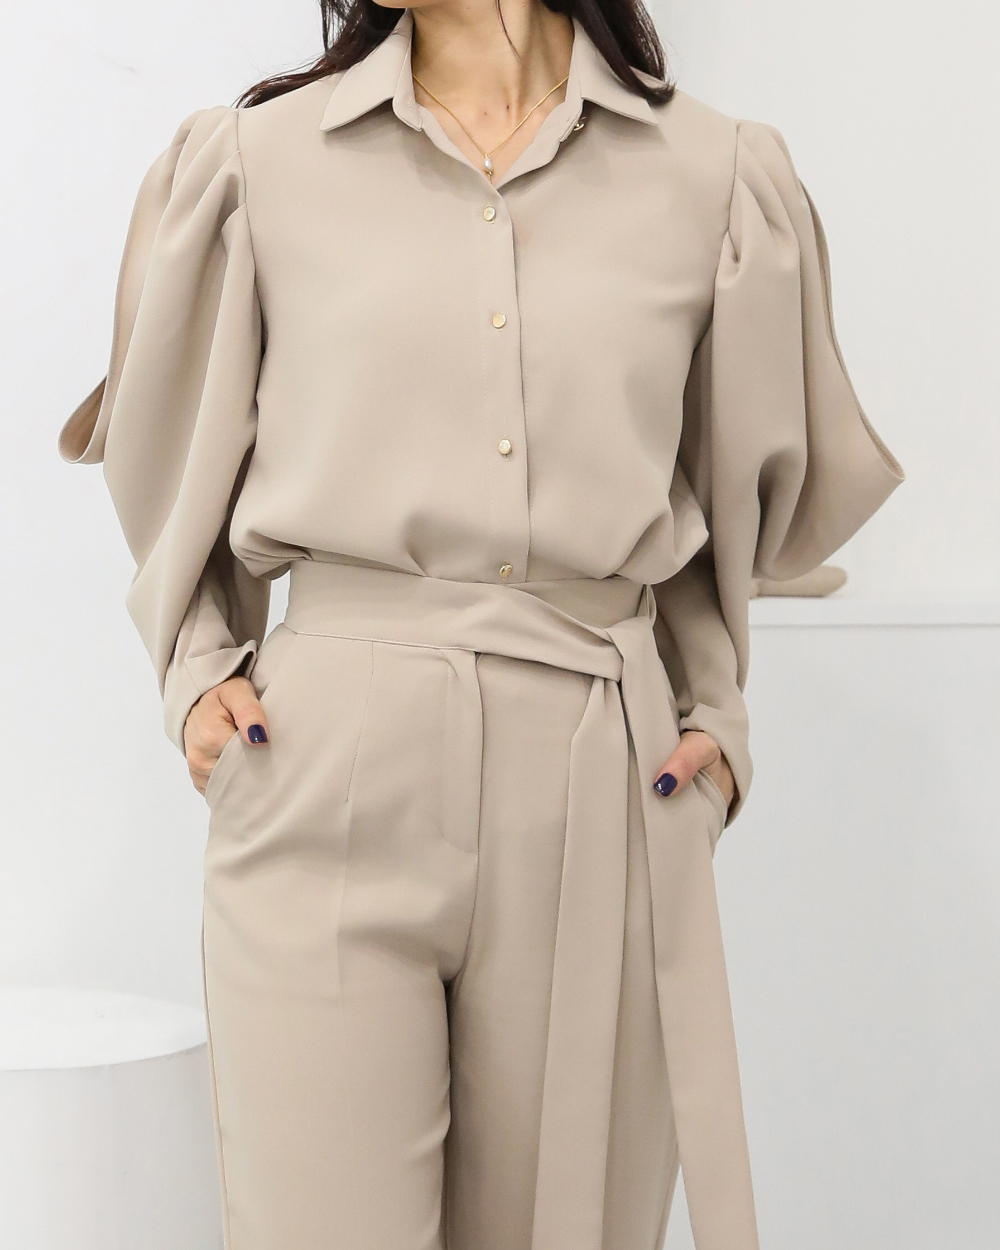 blouse model image-S5L4